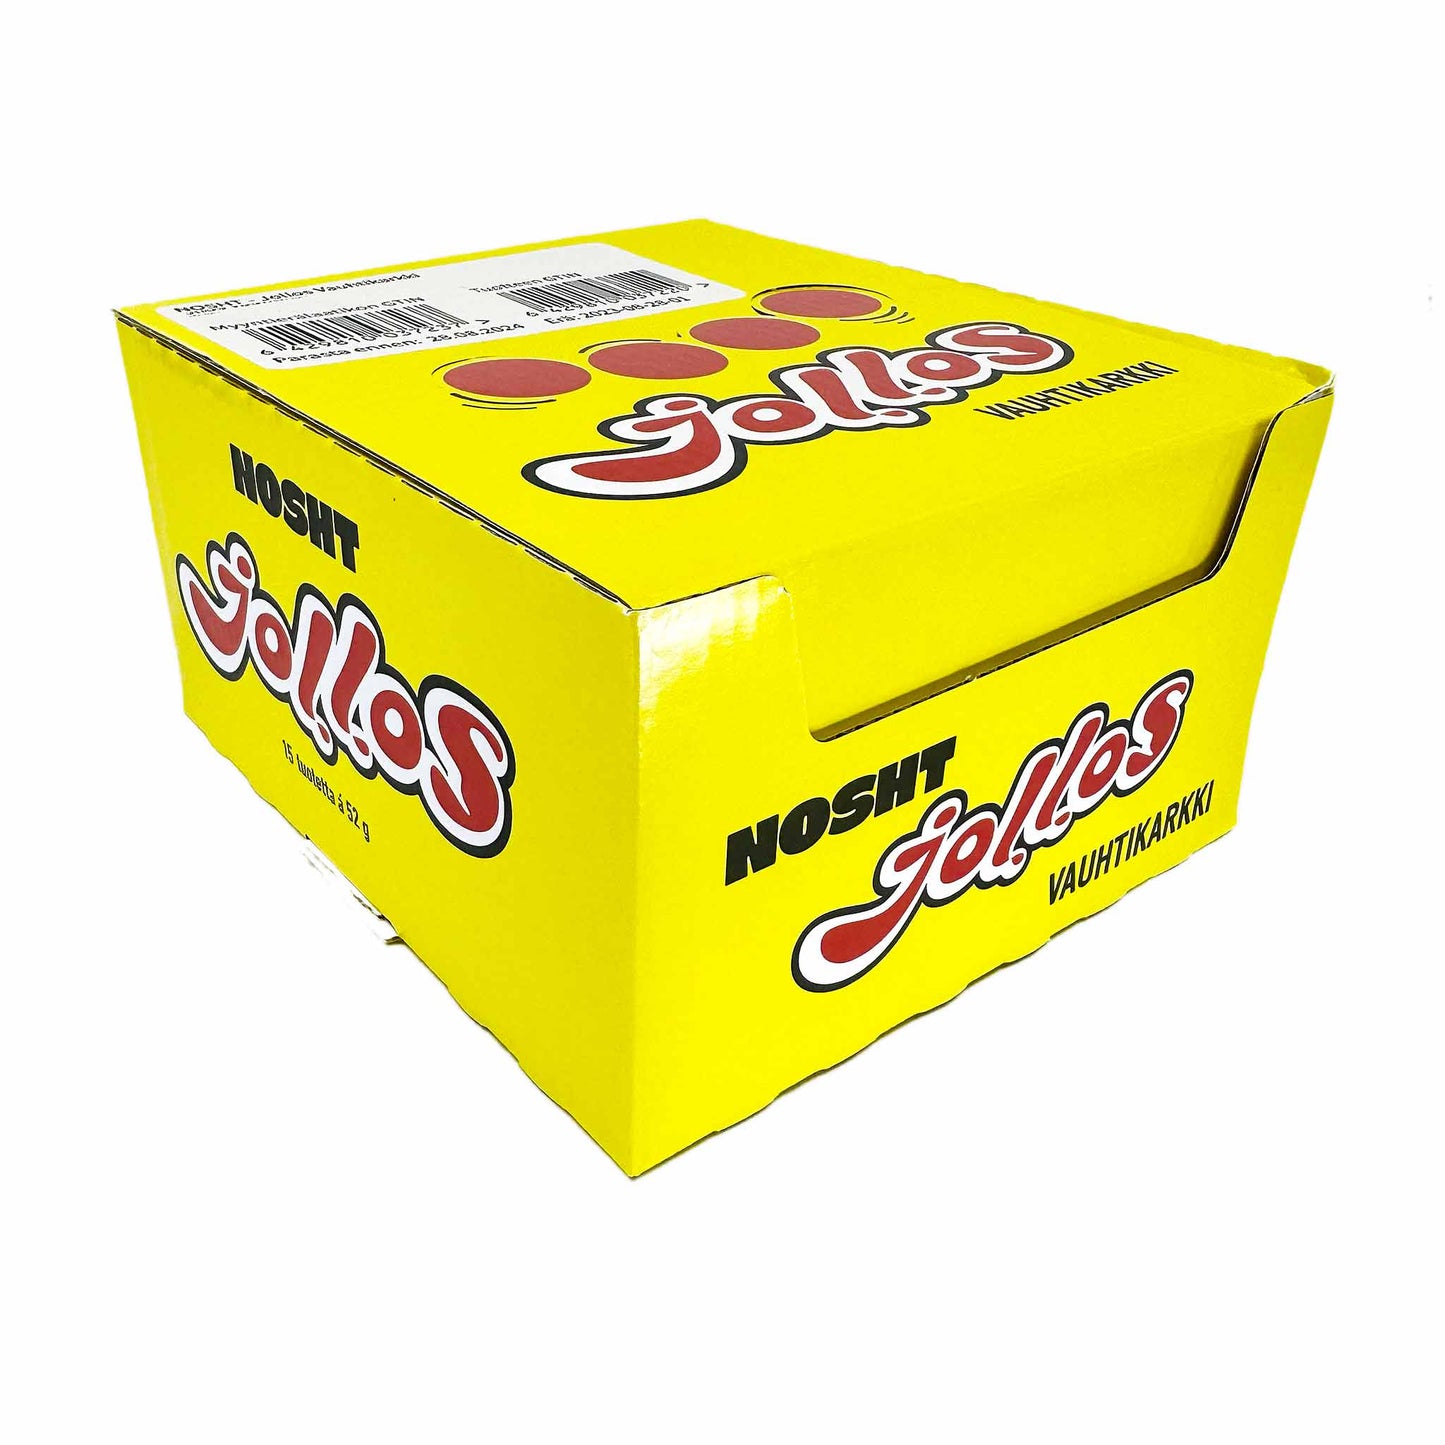 Nosht Jollos Energy Chews - Bundle Box - Box of 15 servings